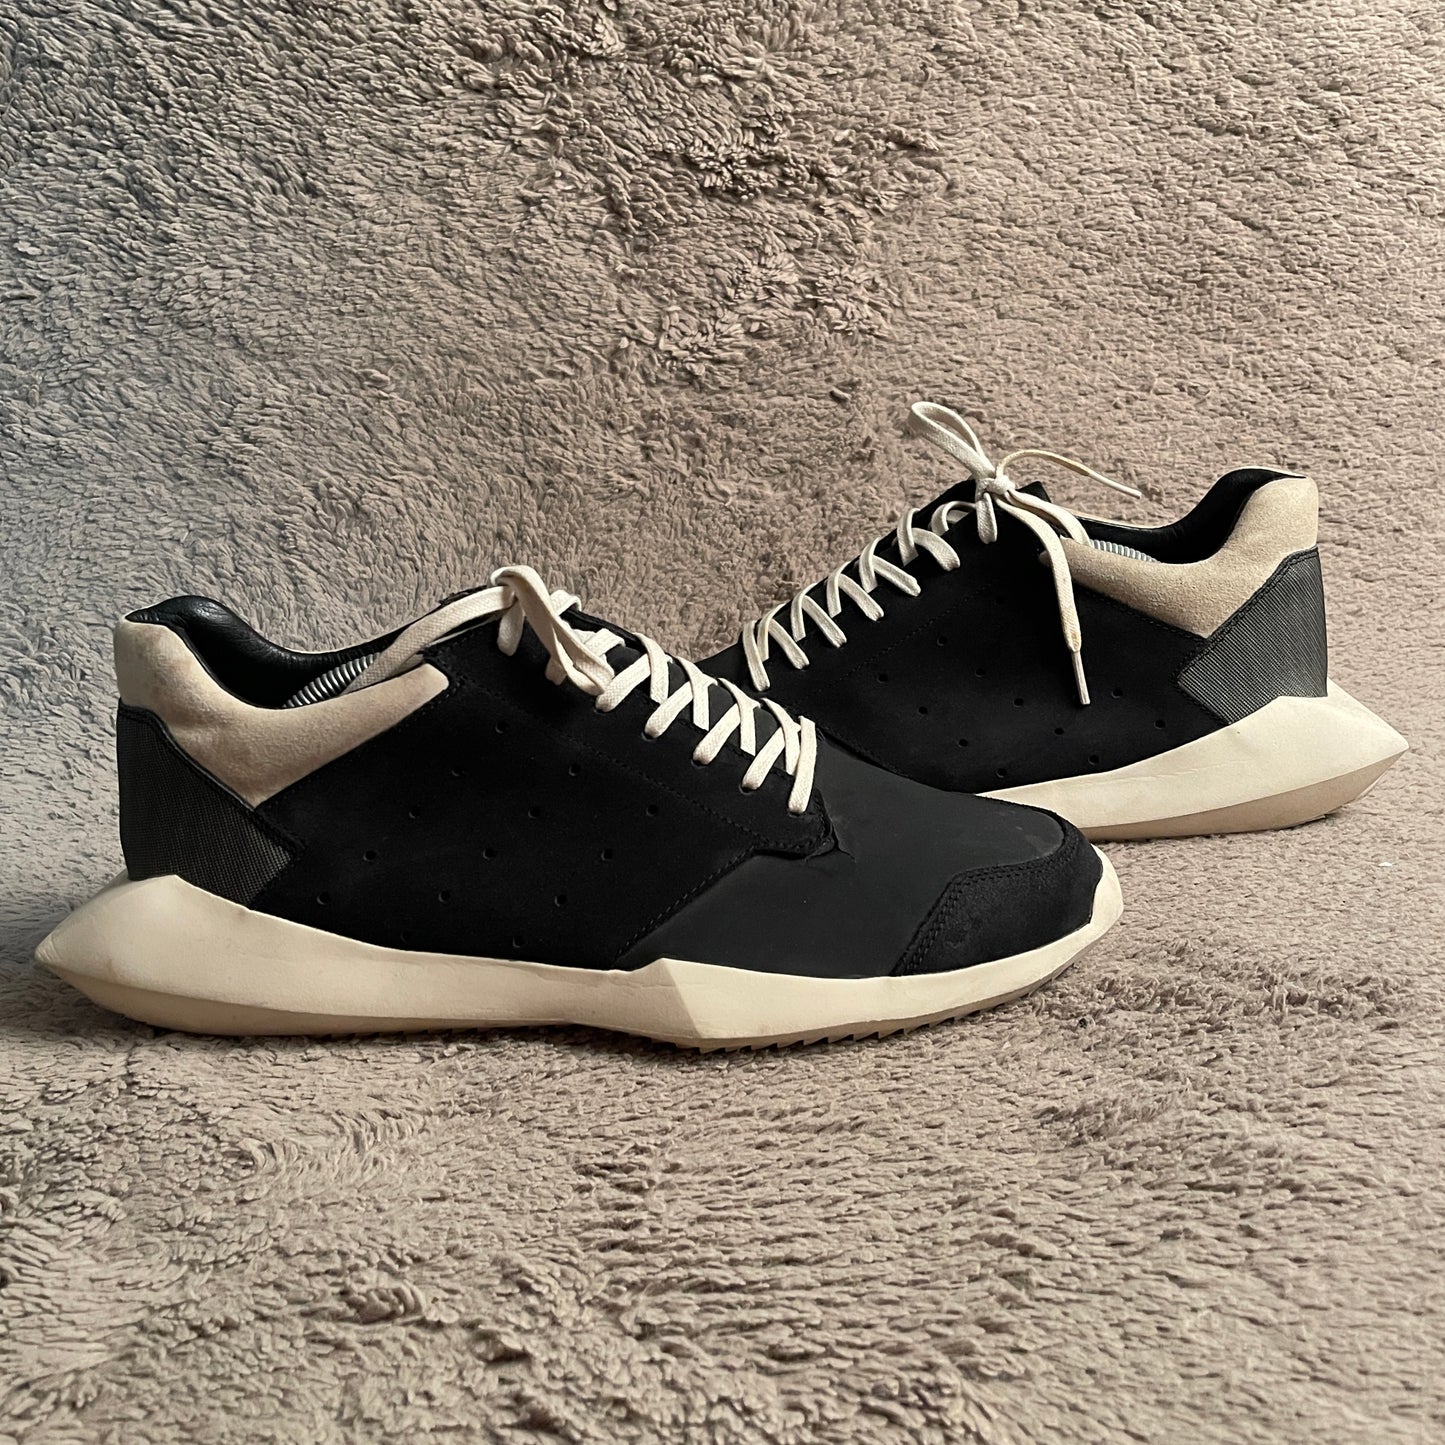 Adidas x Rick Owens Tech Runner Sneakers (US 11 / UK 10.5)